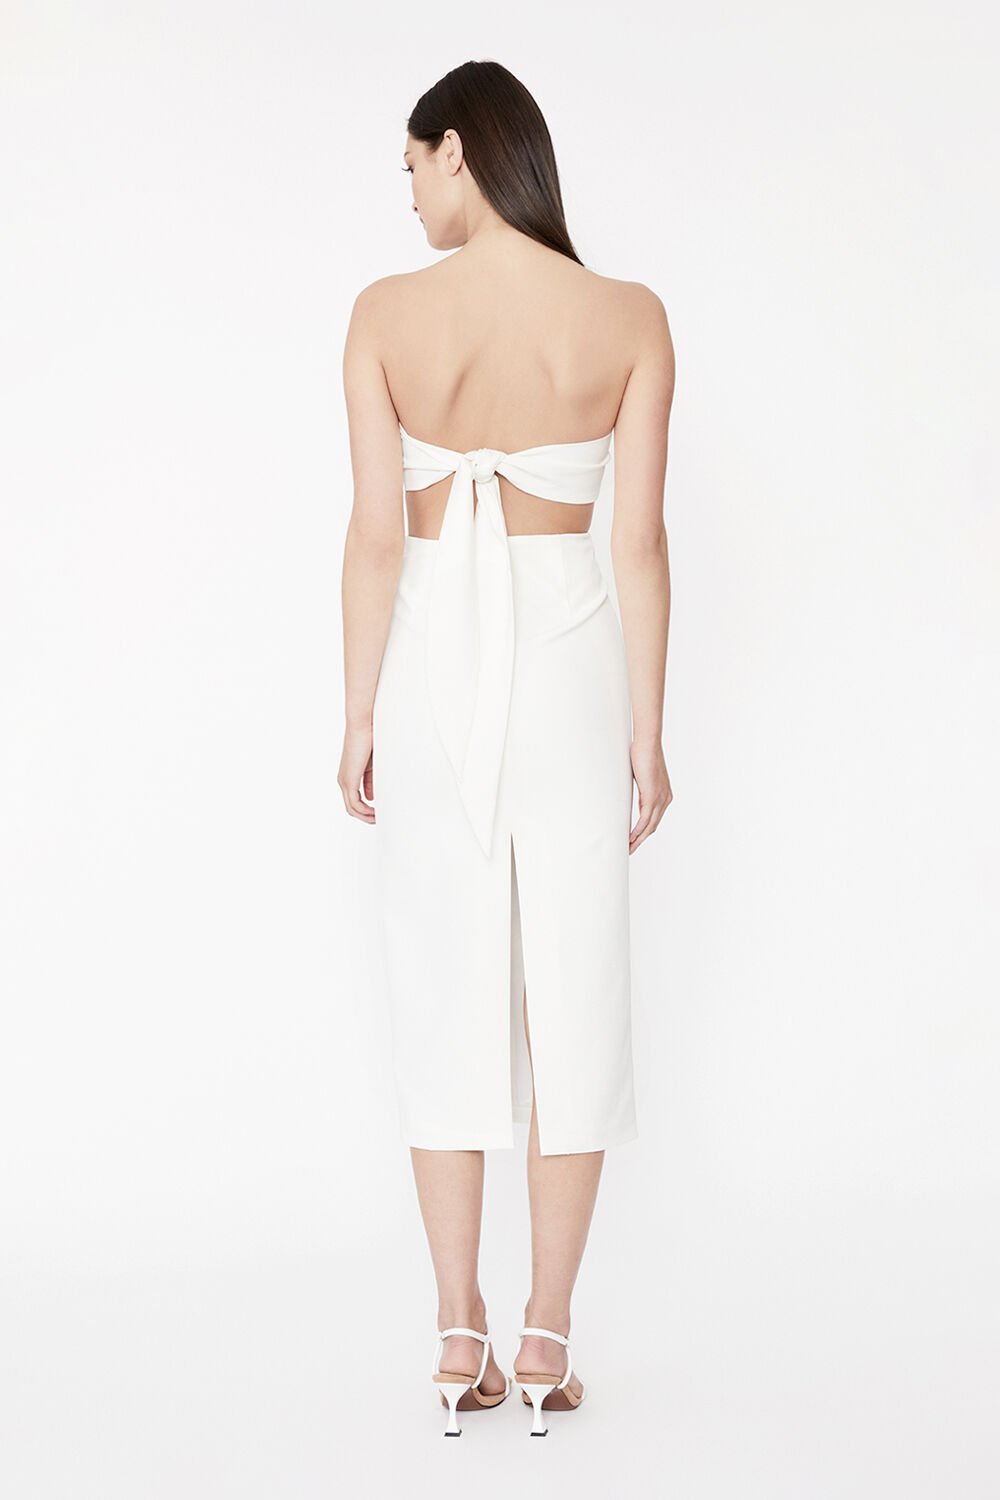 VALERIE STRAPLESS DRESS in colour BRIGHT WHITE